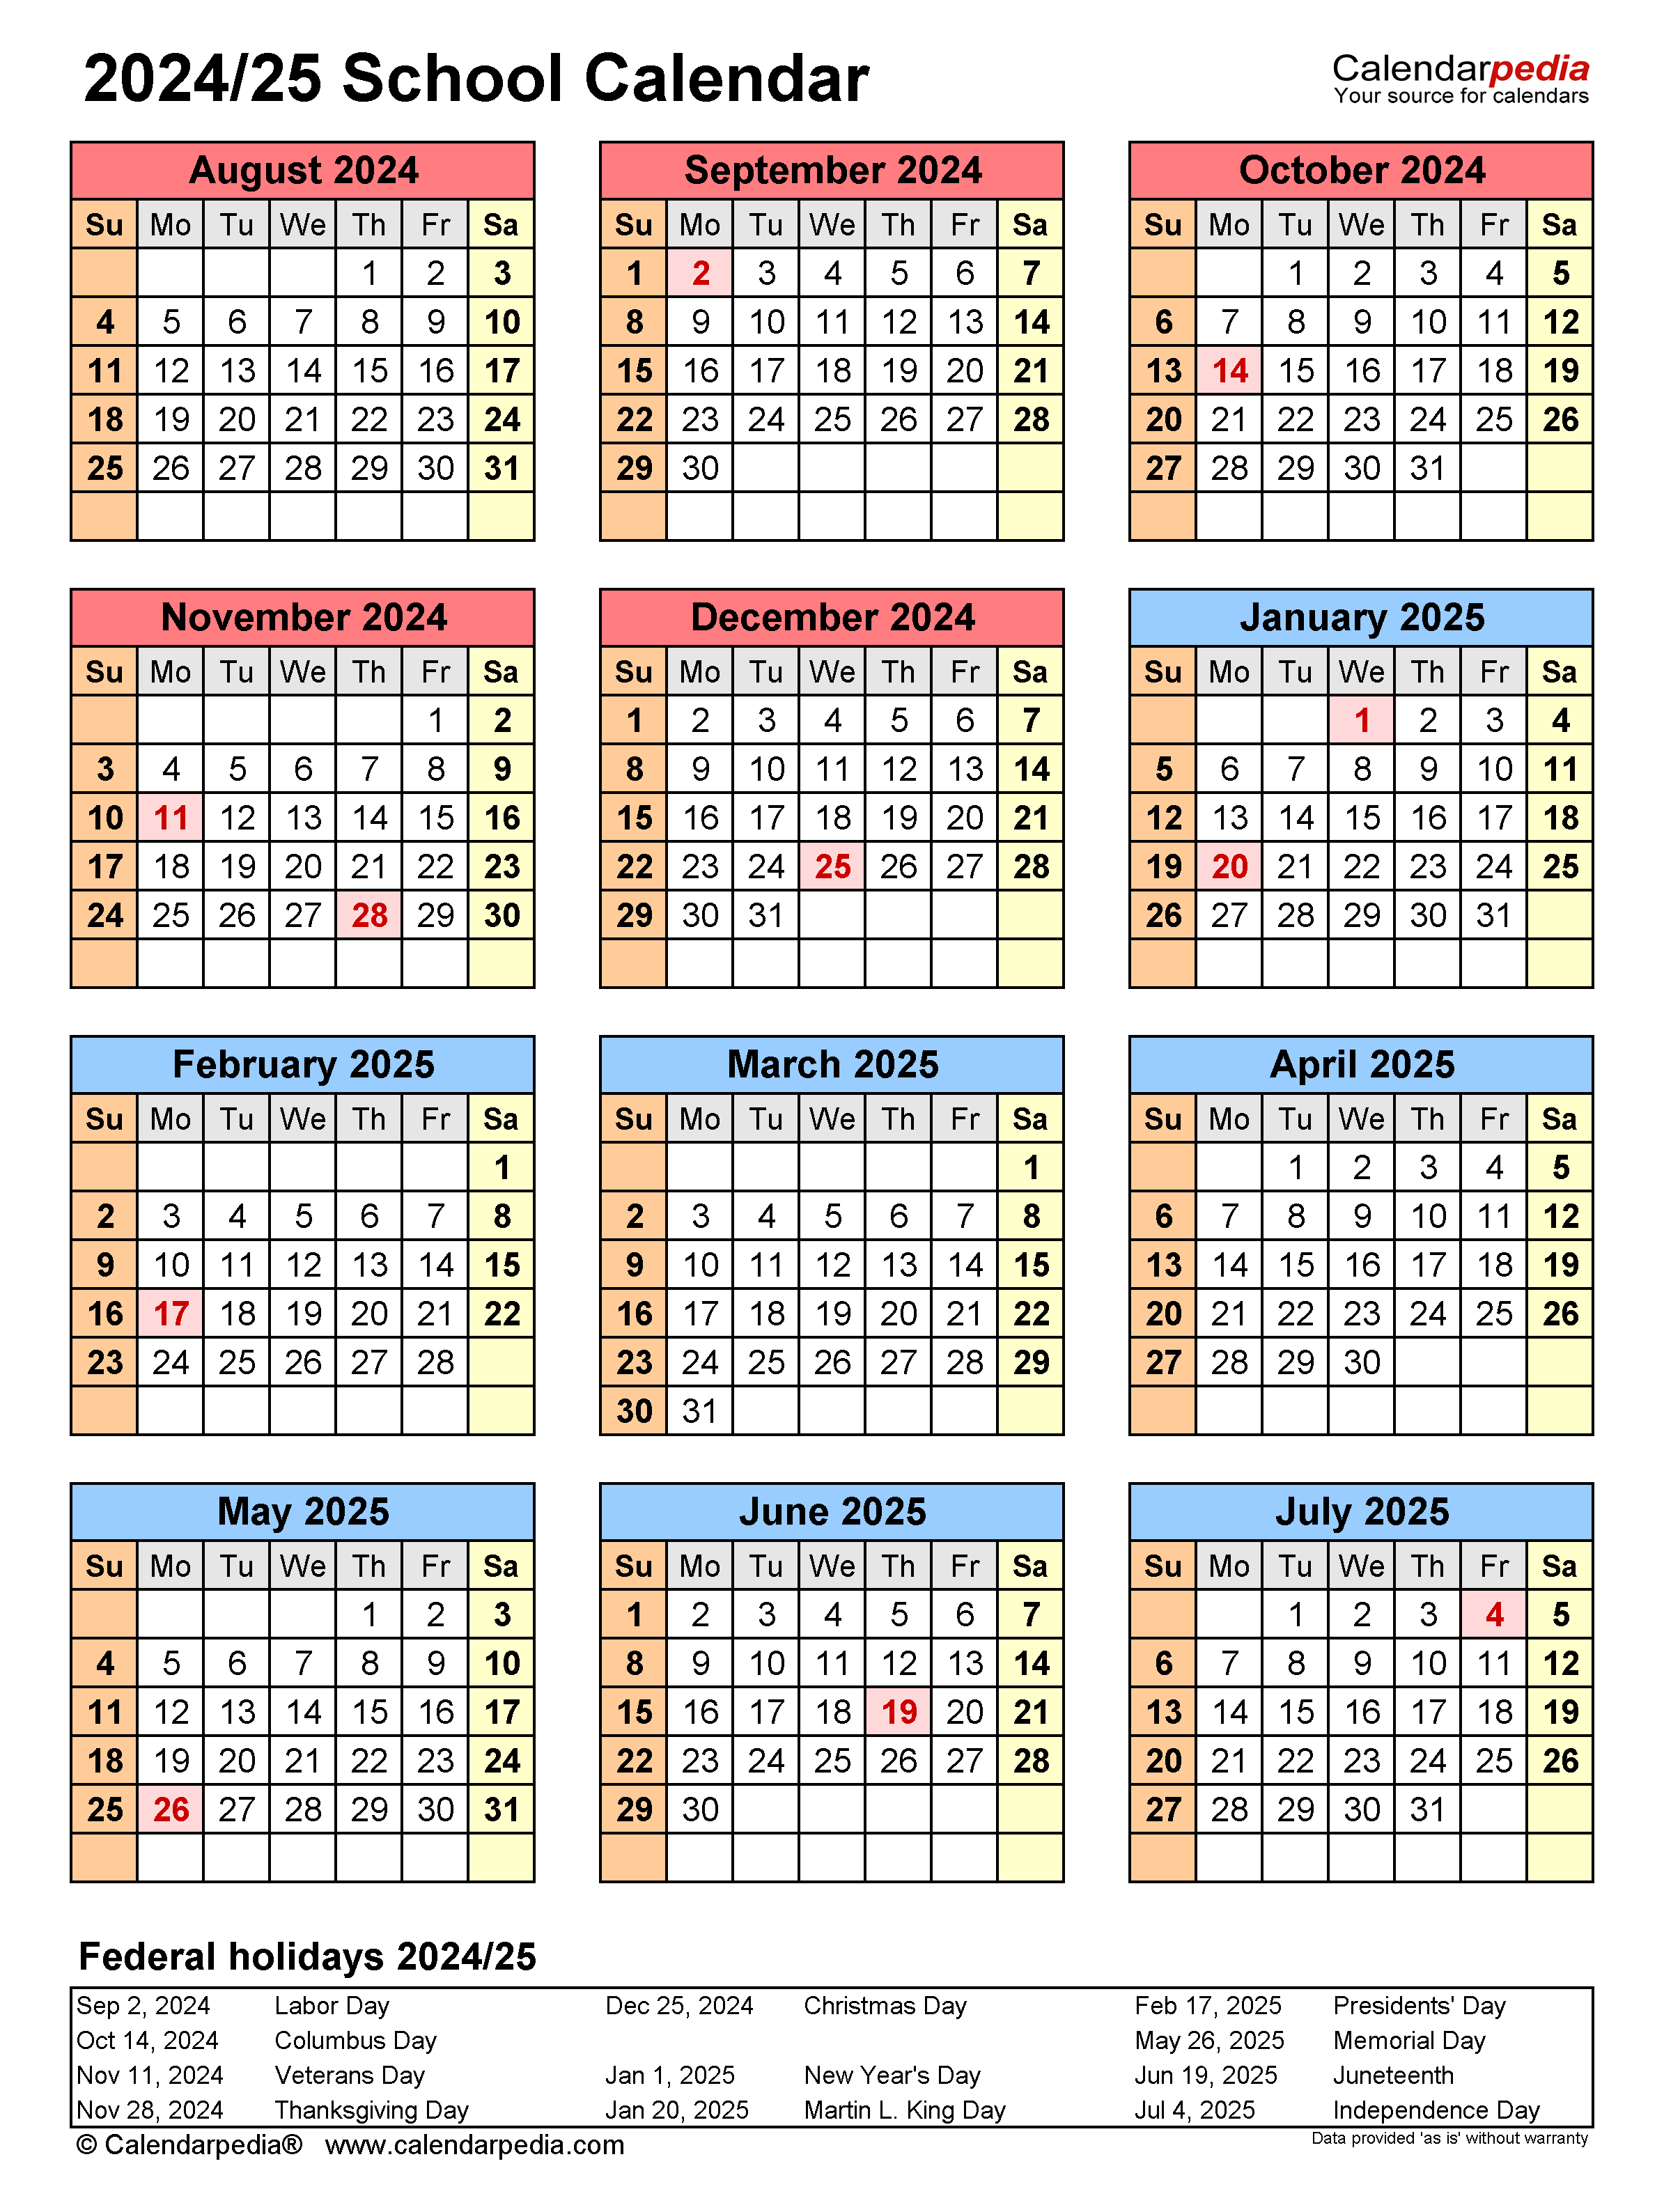 2025 Qld School Calendar Printable